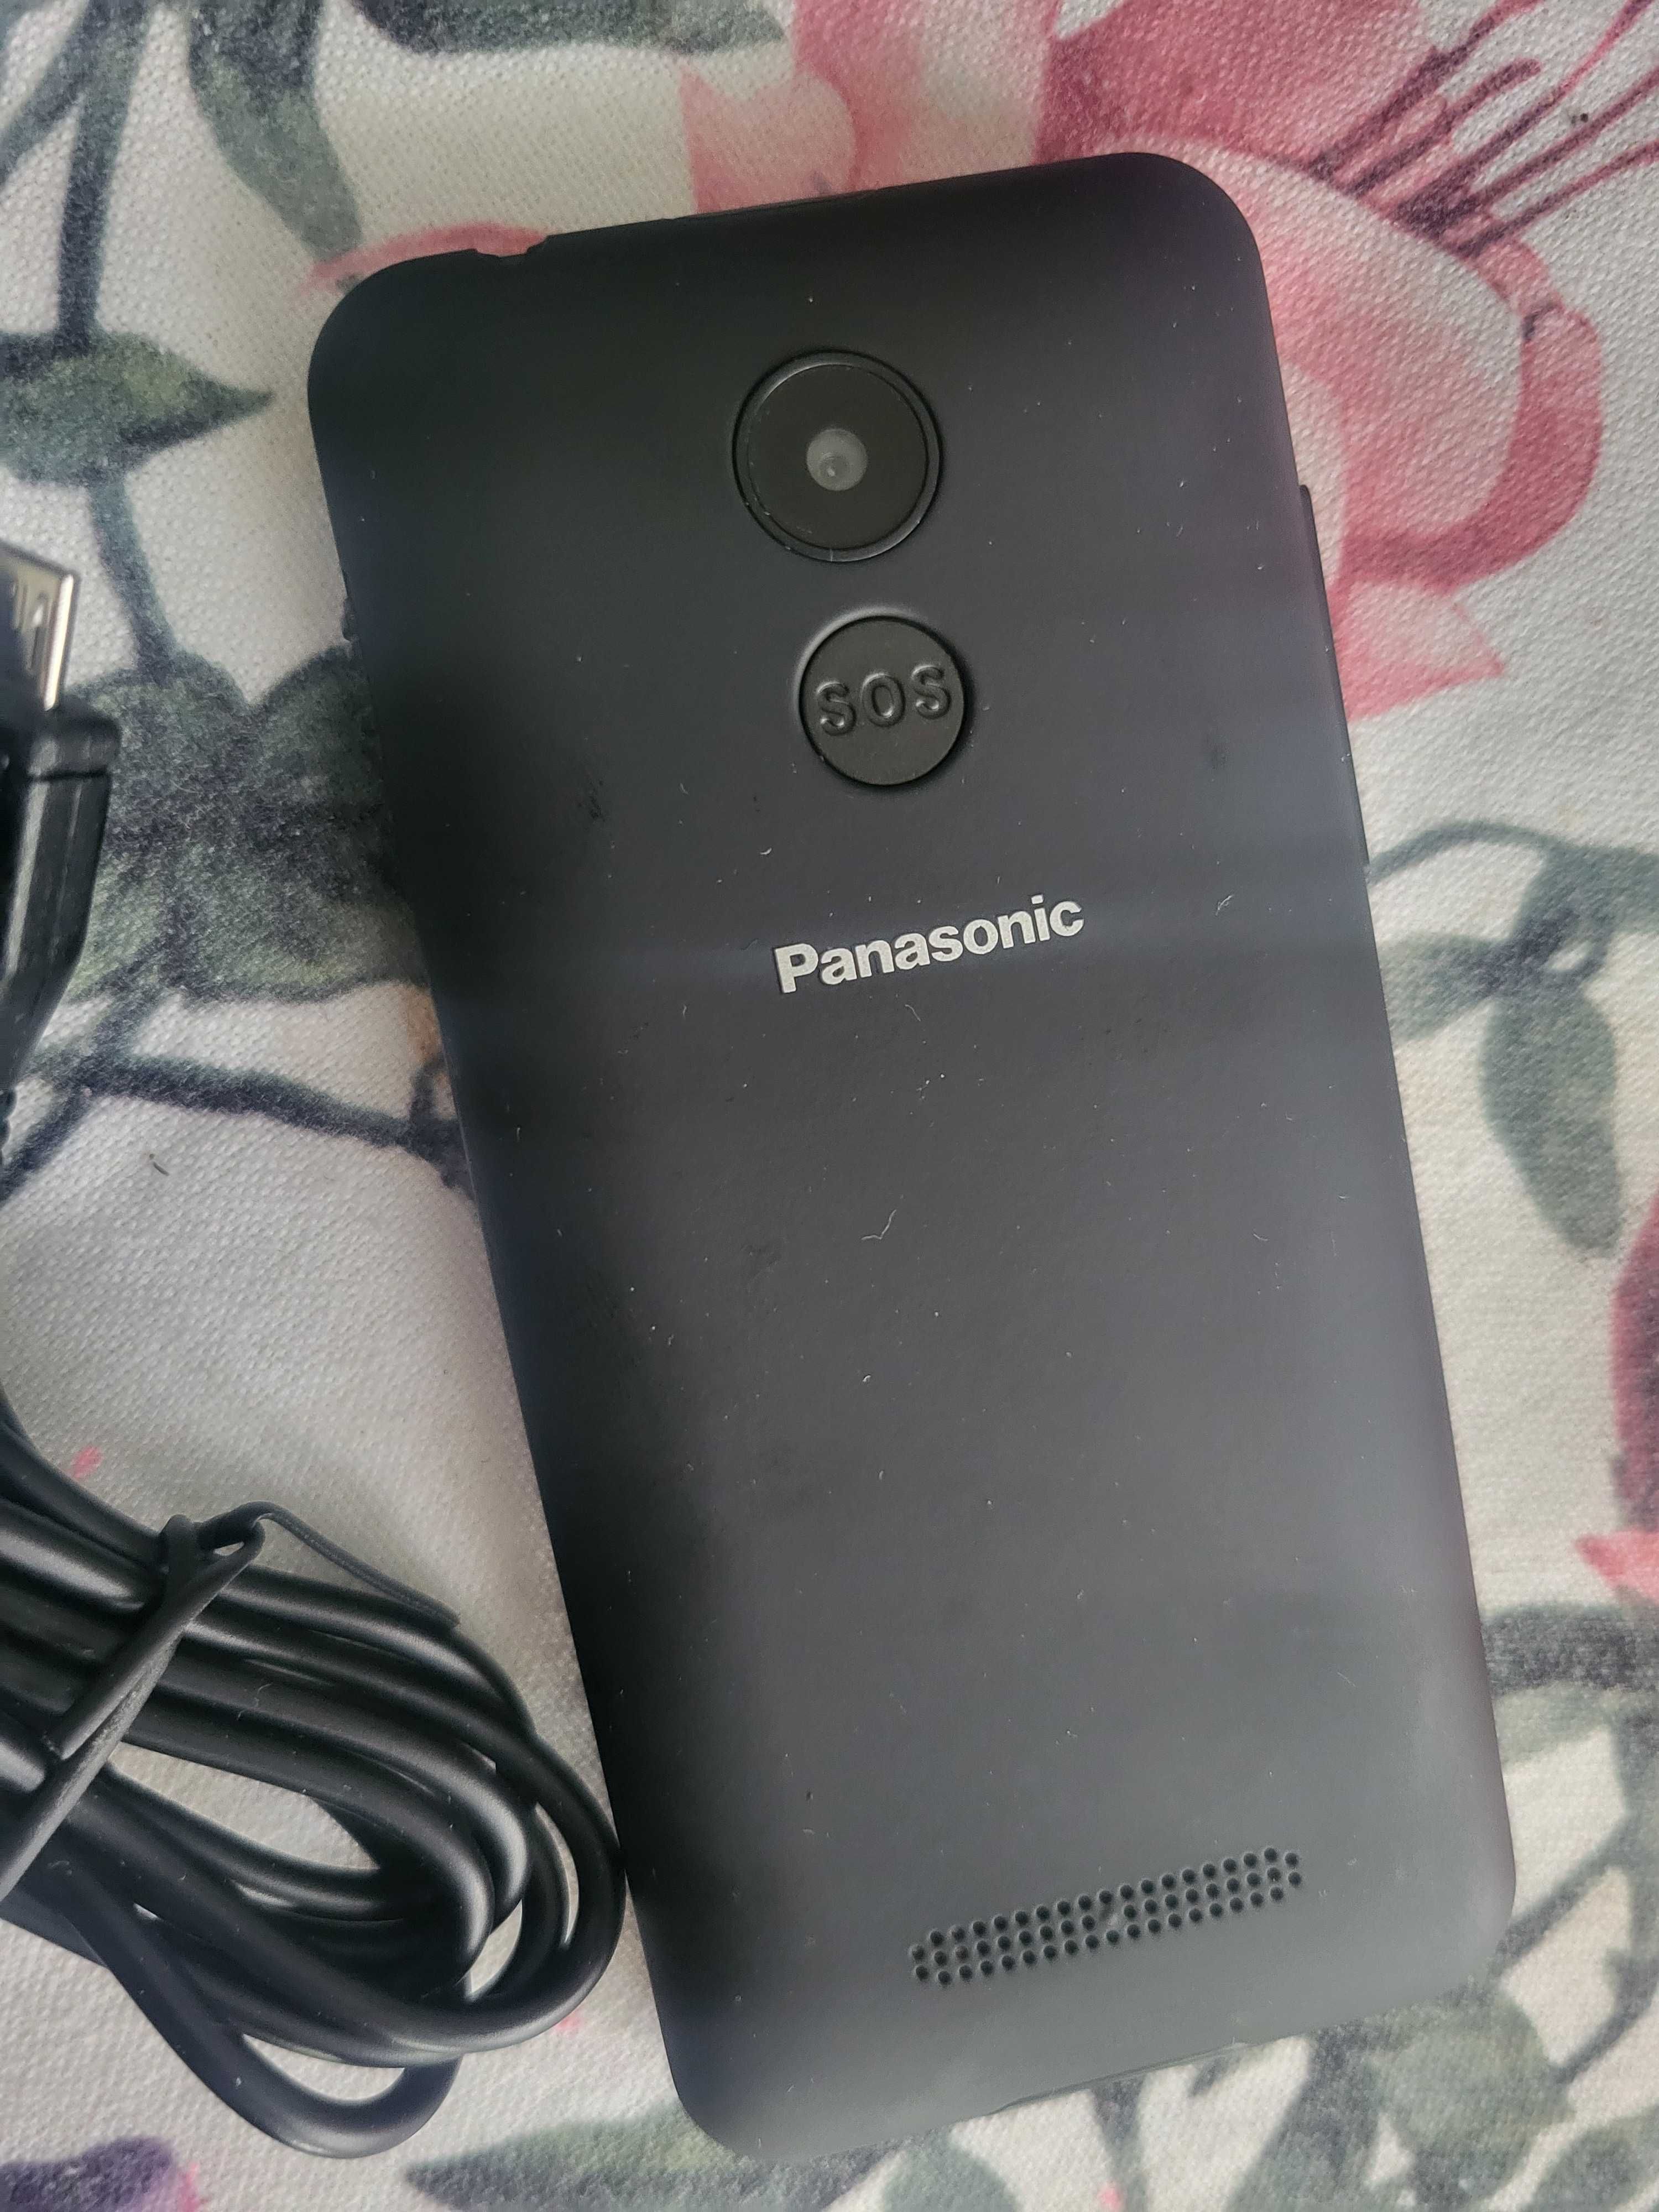 Telefon dla seniora Panasonic KX-TU150 EXBN